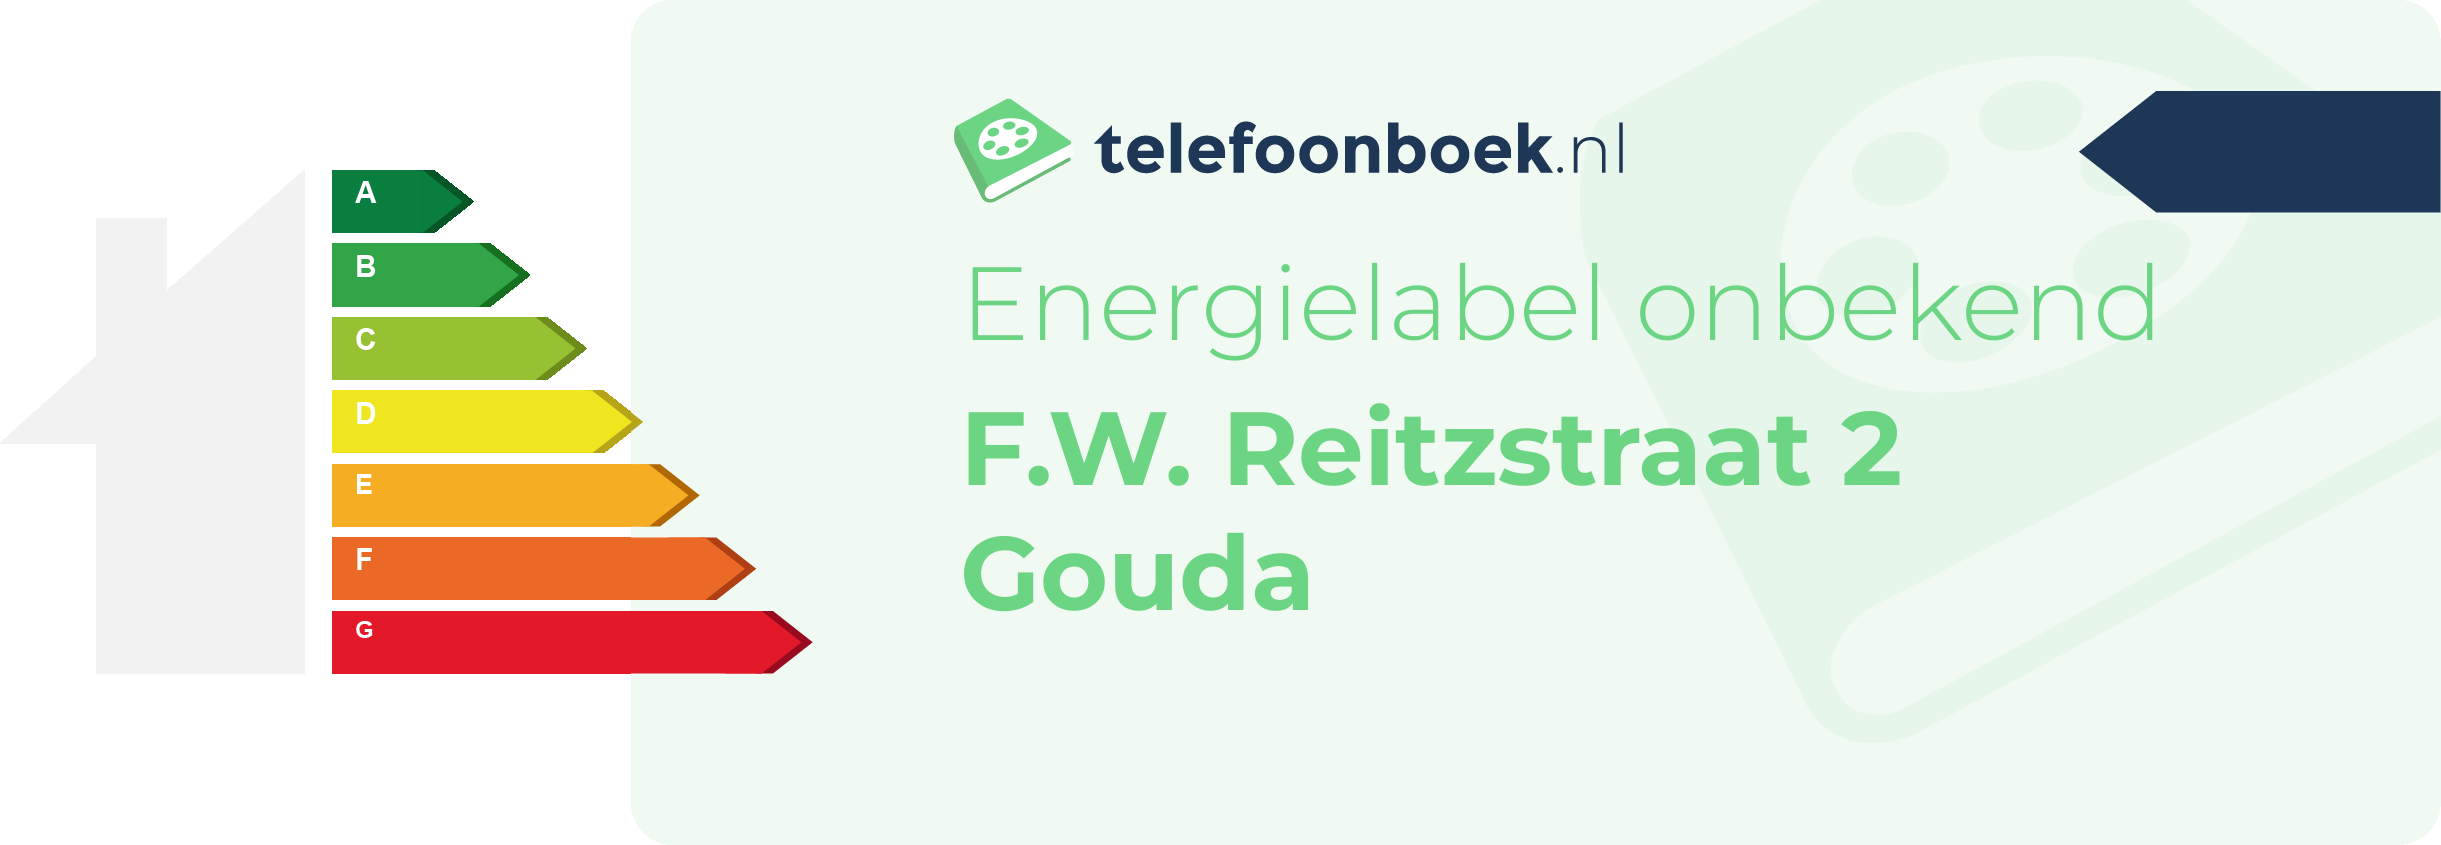 Energielabel F.W. Reitzstraat 2 Gouda